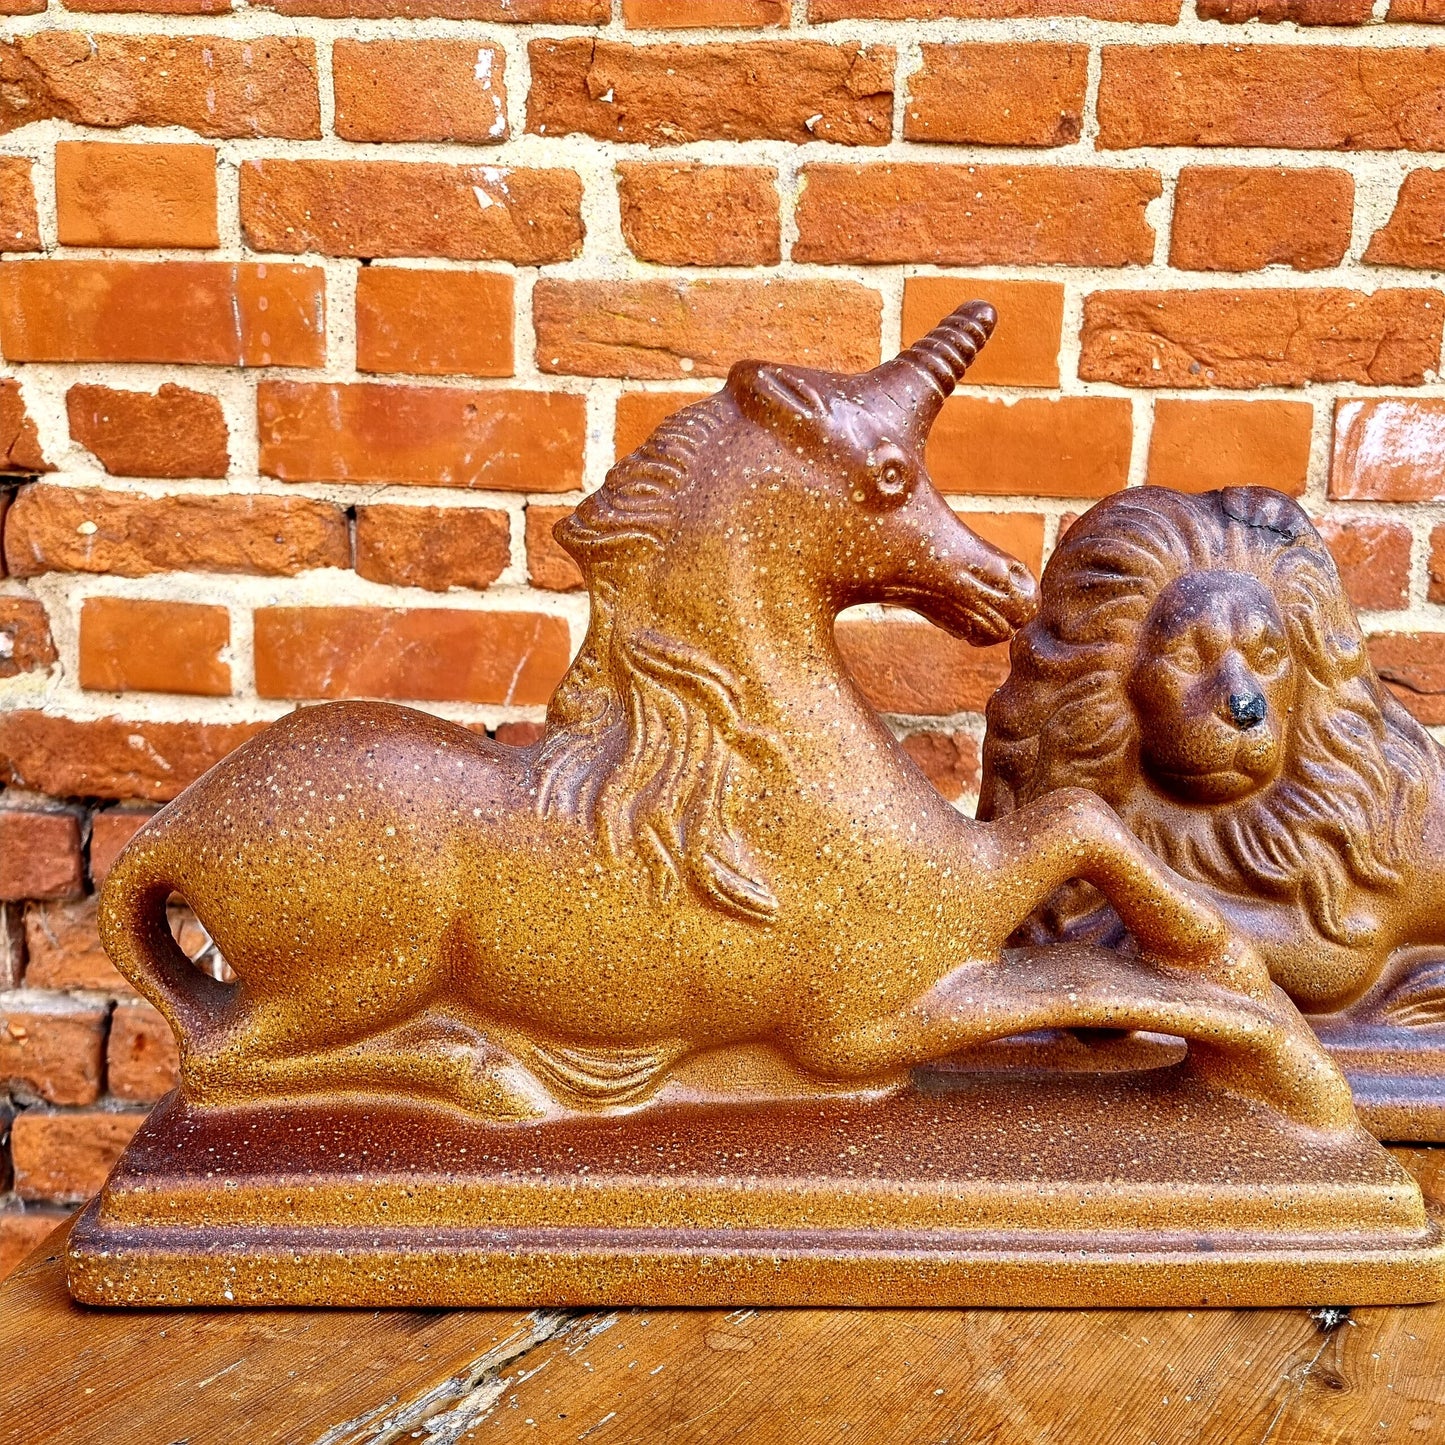 Pair of Large 19th Century English Antique Pottery Salt Glazed Stoneware Figures Depicting the Lion and Unicorn